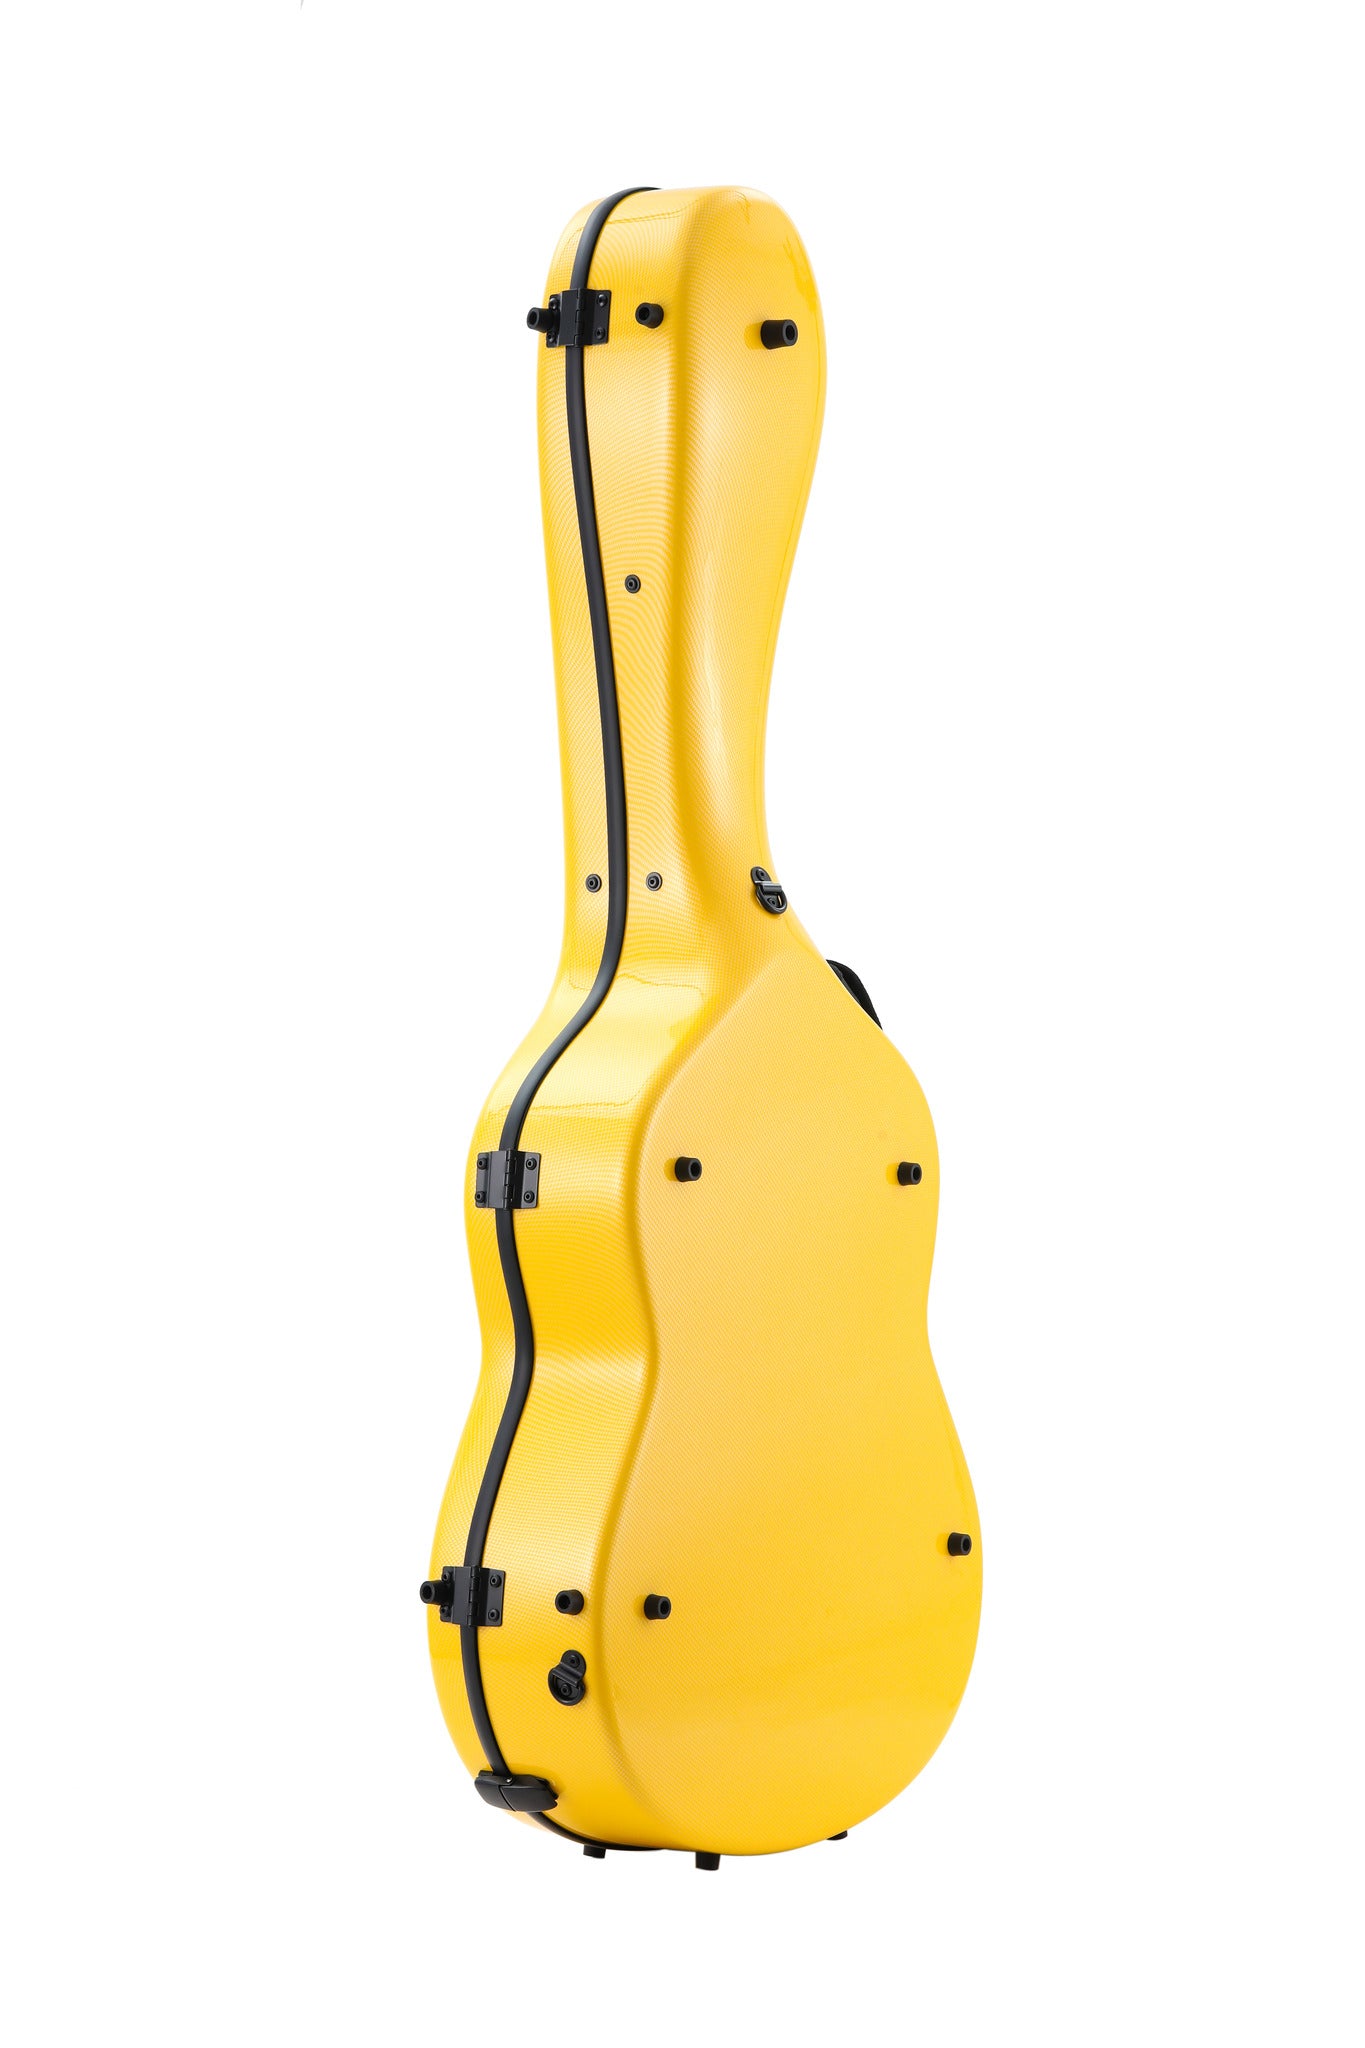 
Custodia Alba Guitar Beads, motivo carbonio giallo lucido, per chitarra classica, acustica, chitarra flamenco